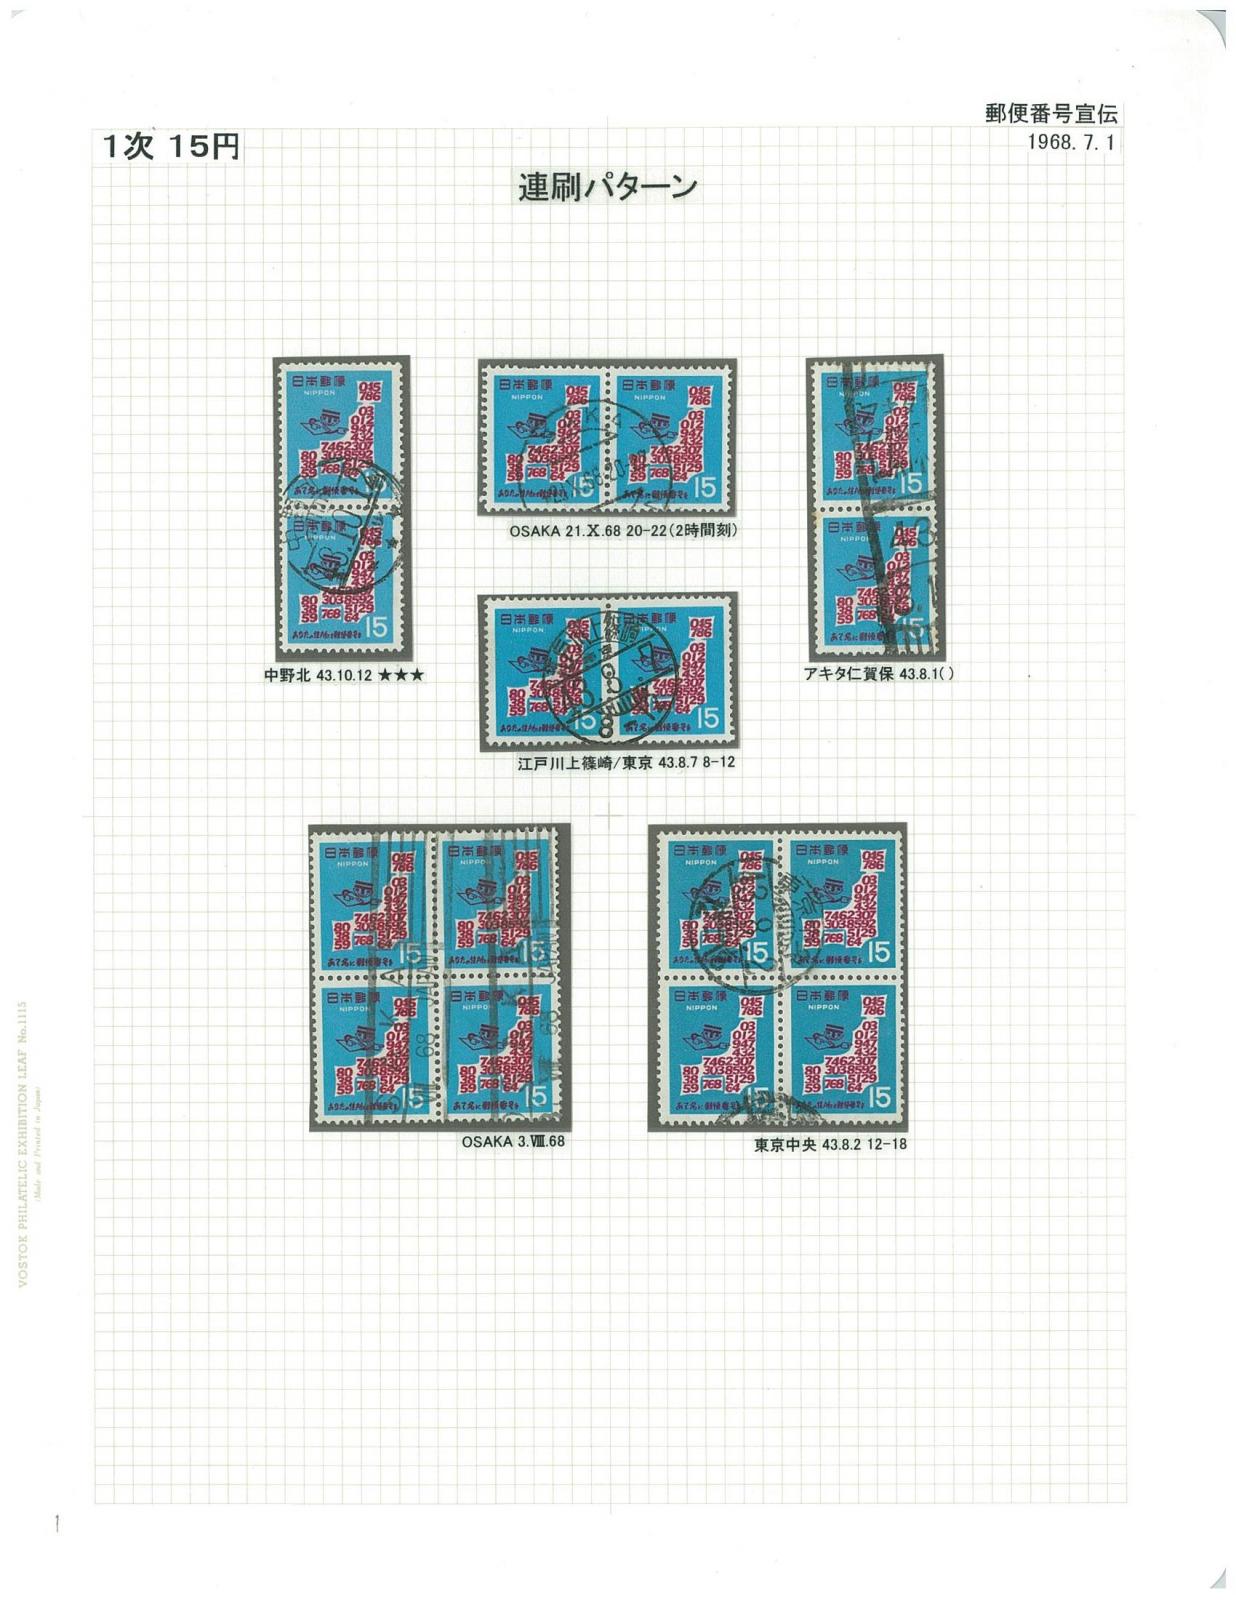 Japan Propaganda Of Postal Code 2 Stampedia Exhibition As Virtual Stamp Exhibition